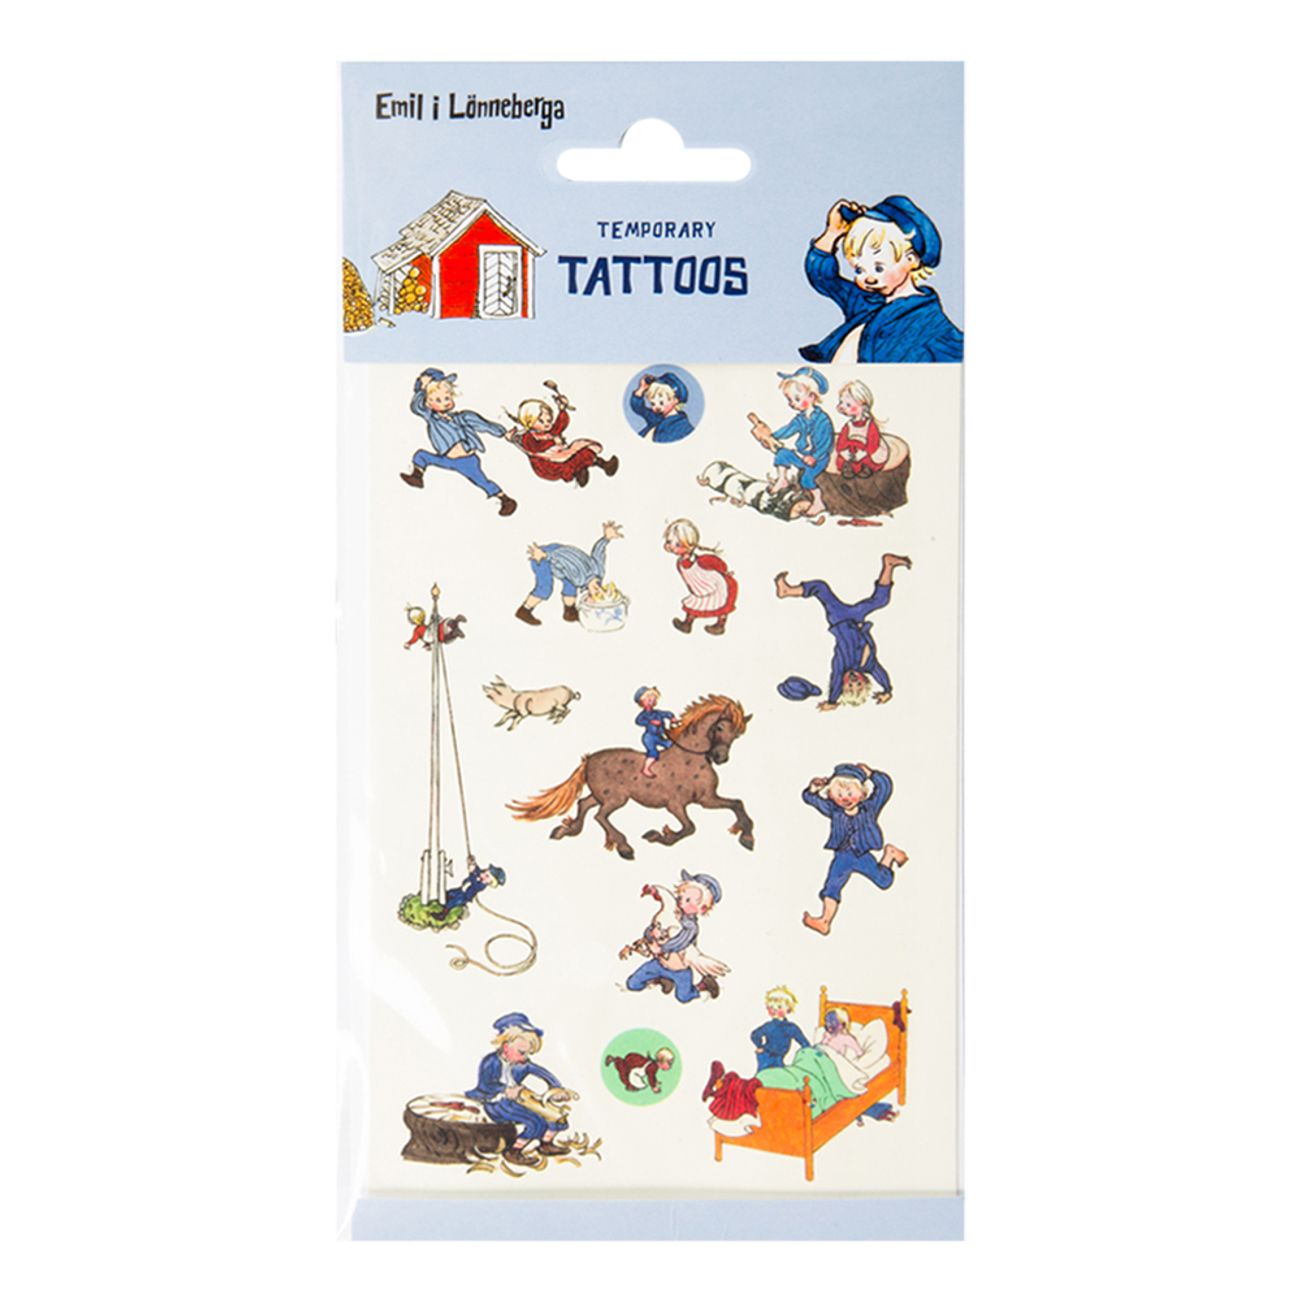 tatueringar-emil-i-lonneberga-101929-1